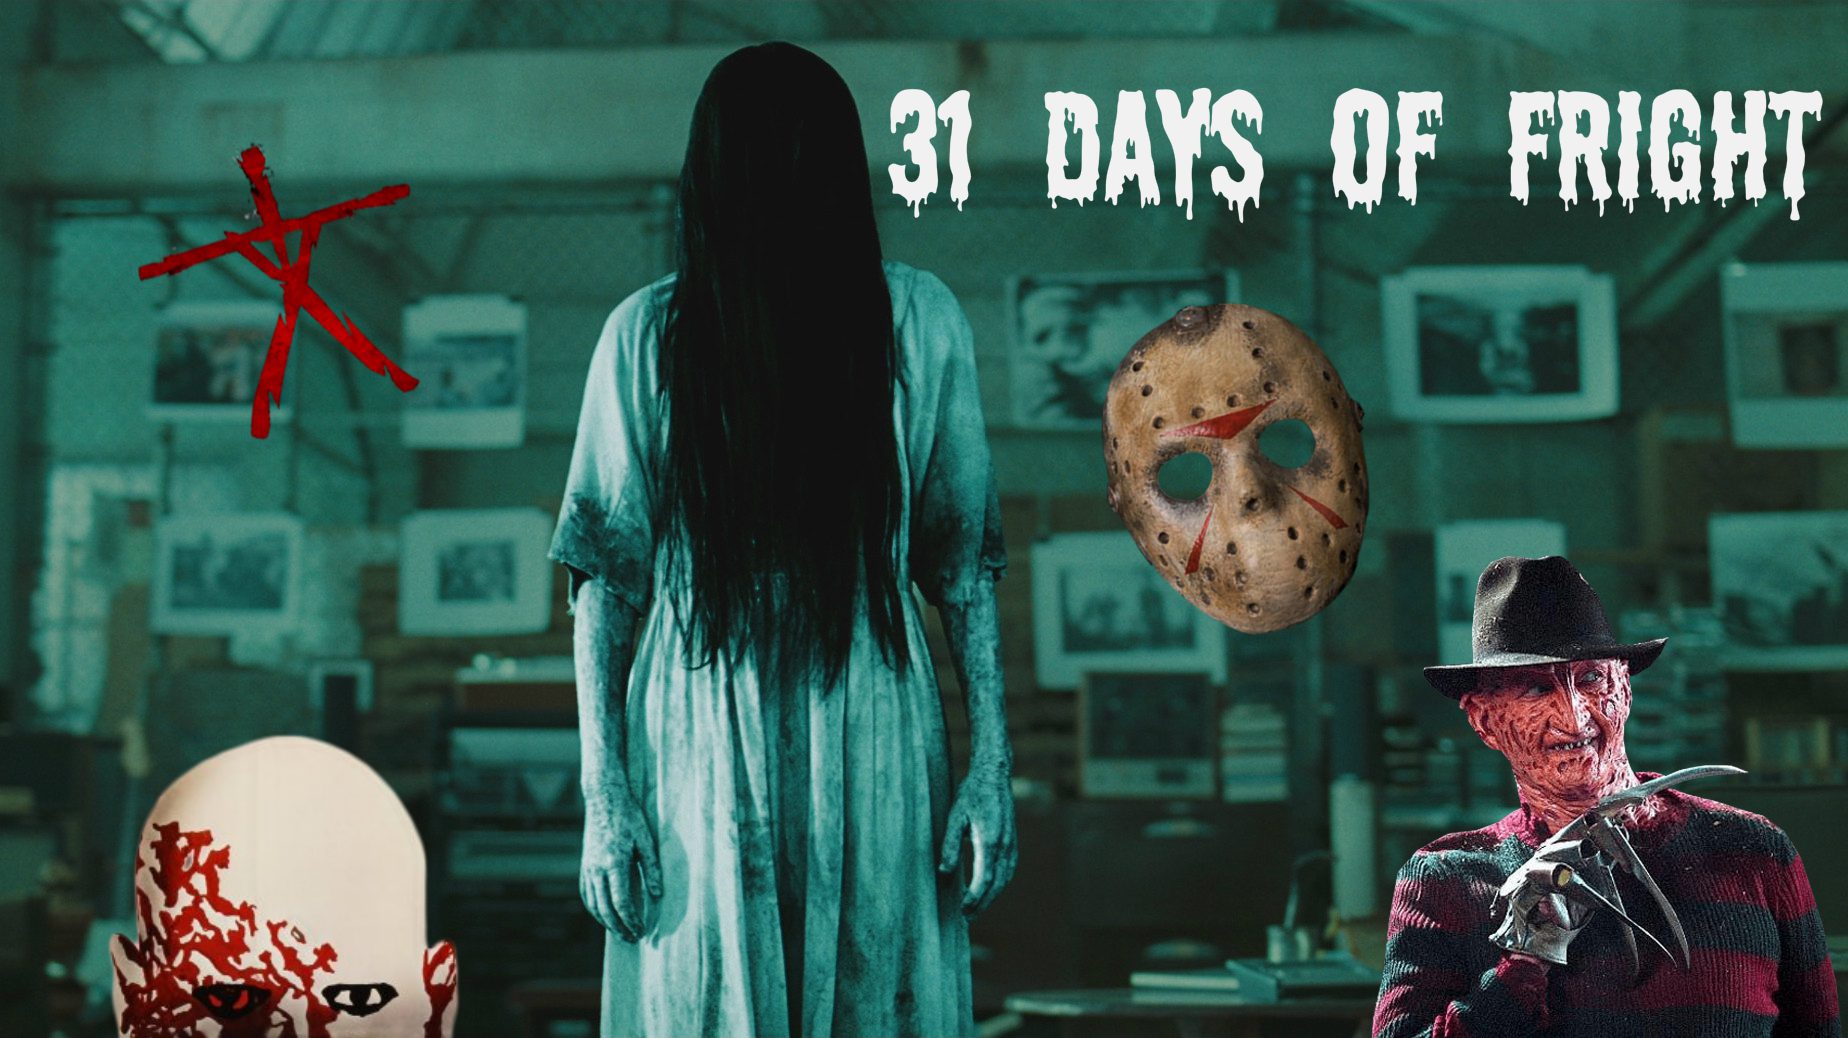 31 Days of Fright starts tomorrow!